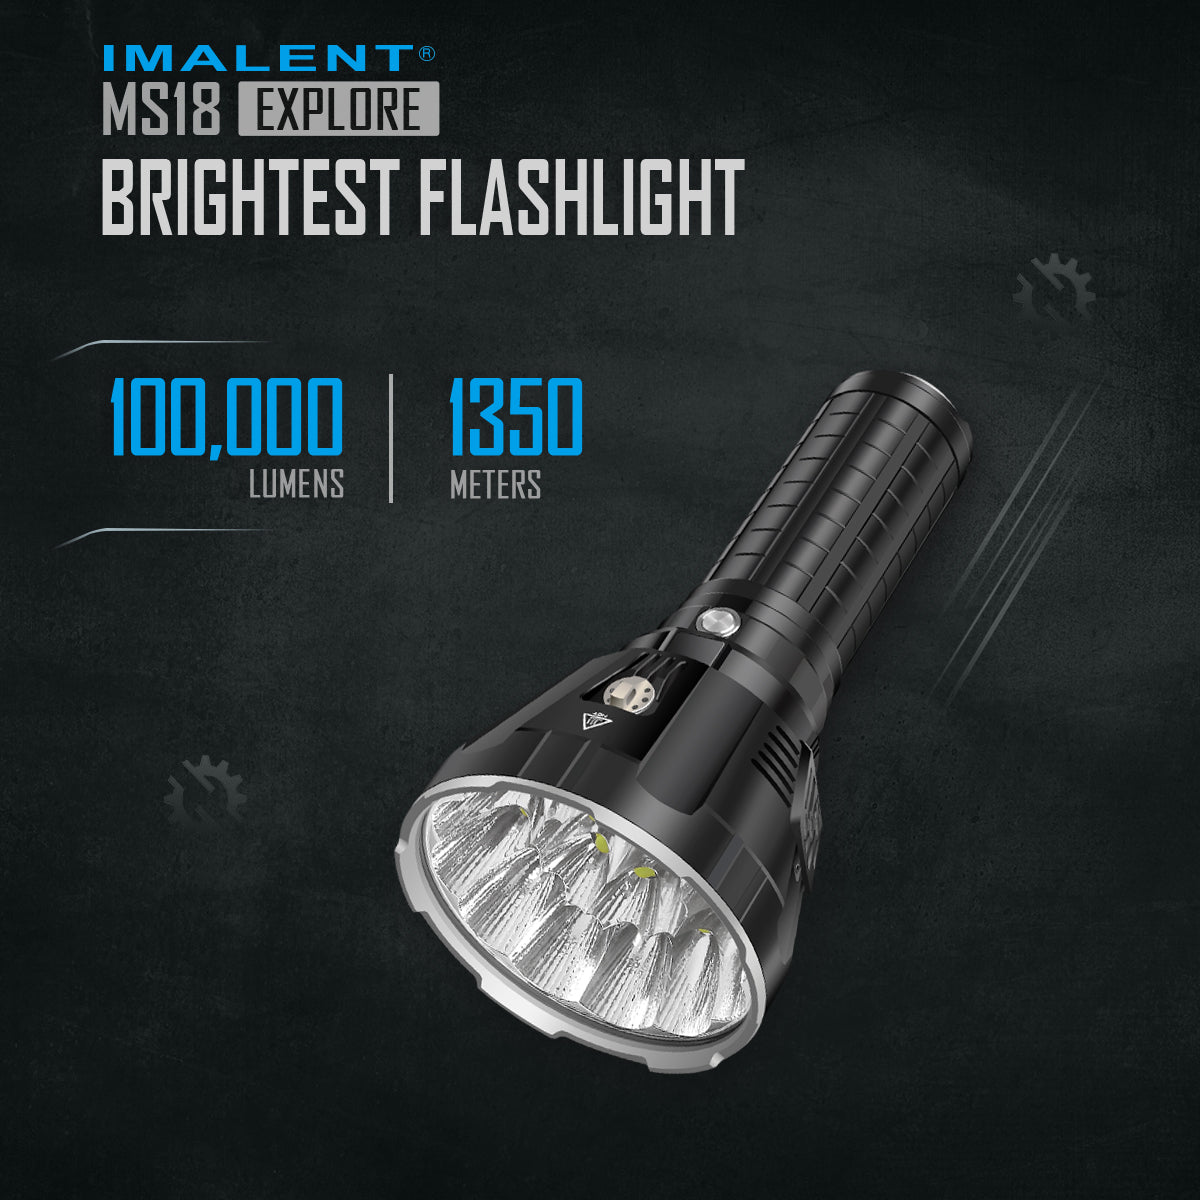 IMALENT MS18 Brightest Flashlight 100,000 Lumens, India